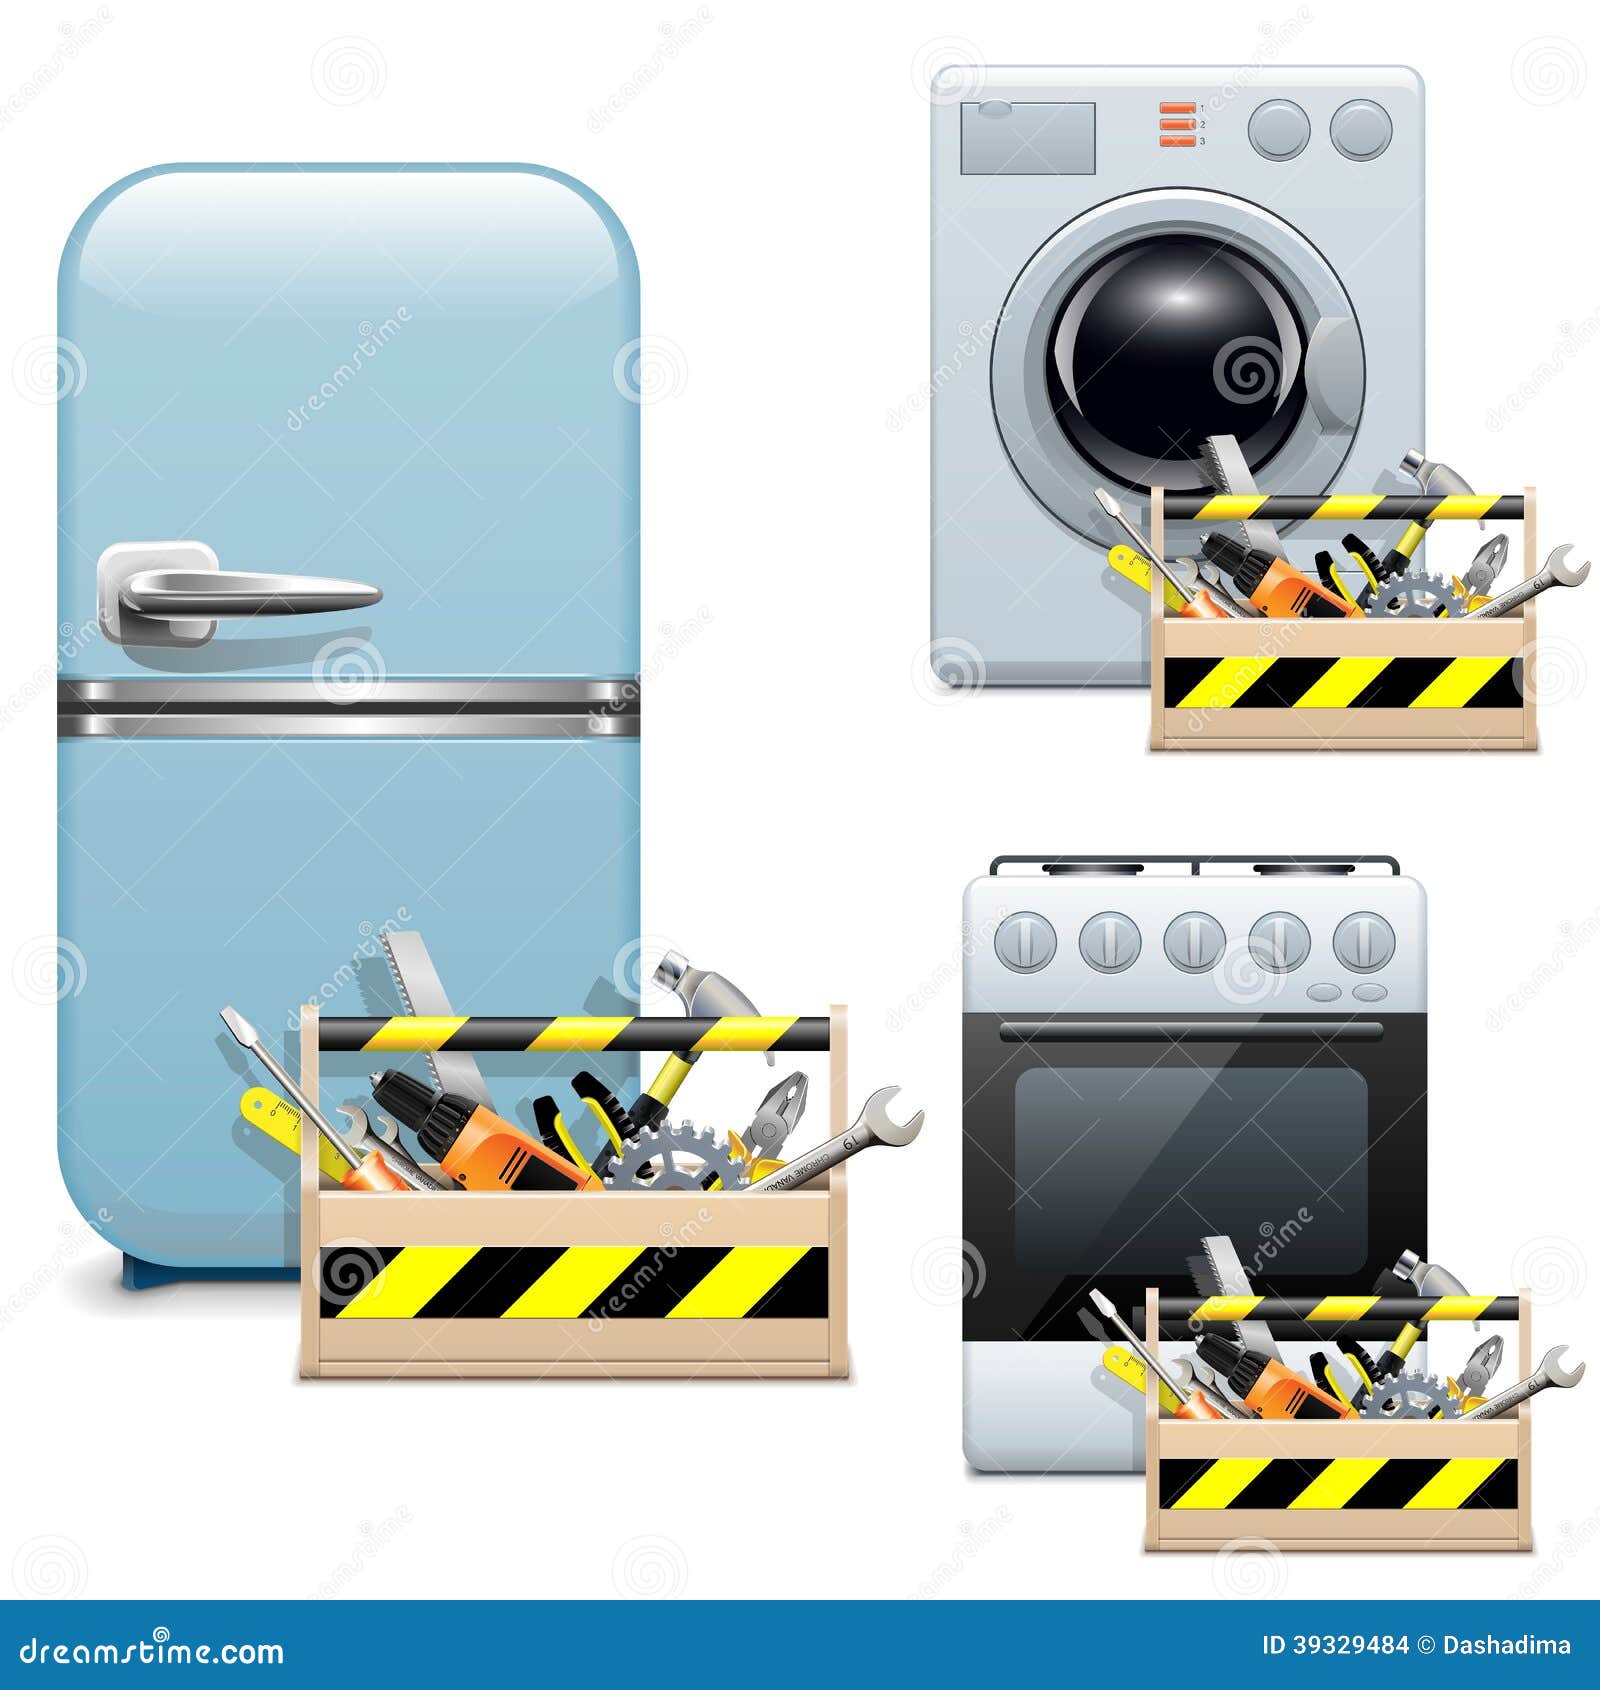 Refrigerator Freezer Repair Dependable Refrigeration  & Appliance Repair Service